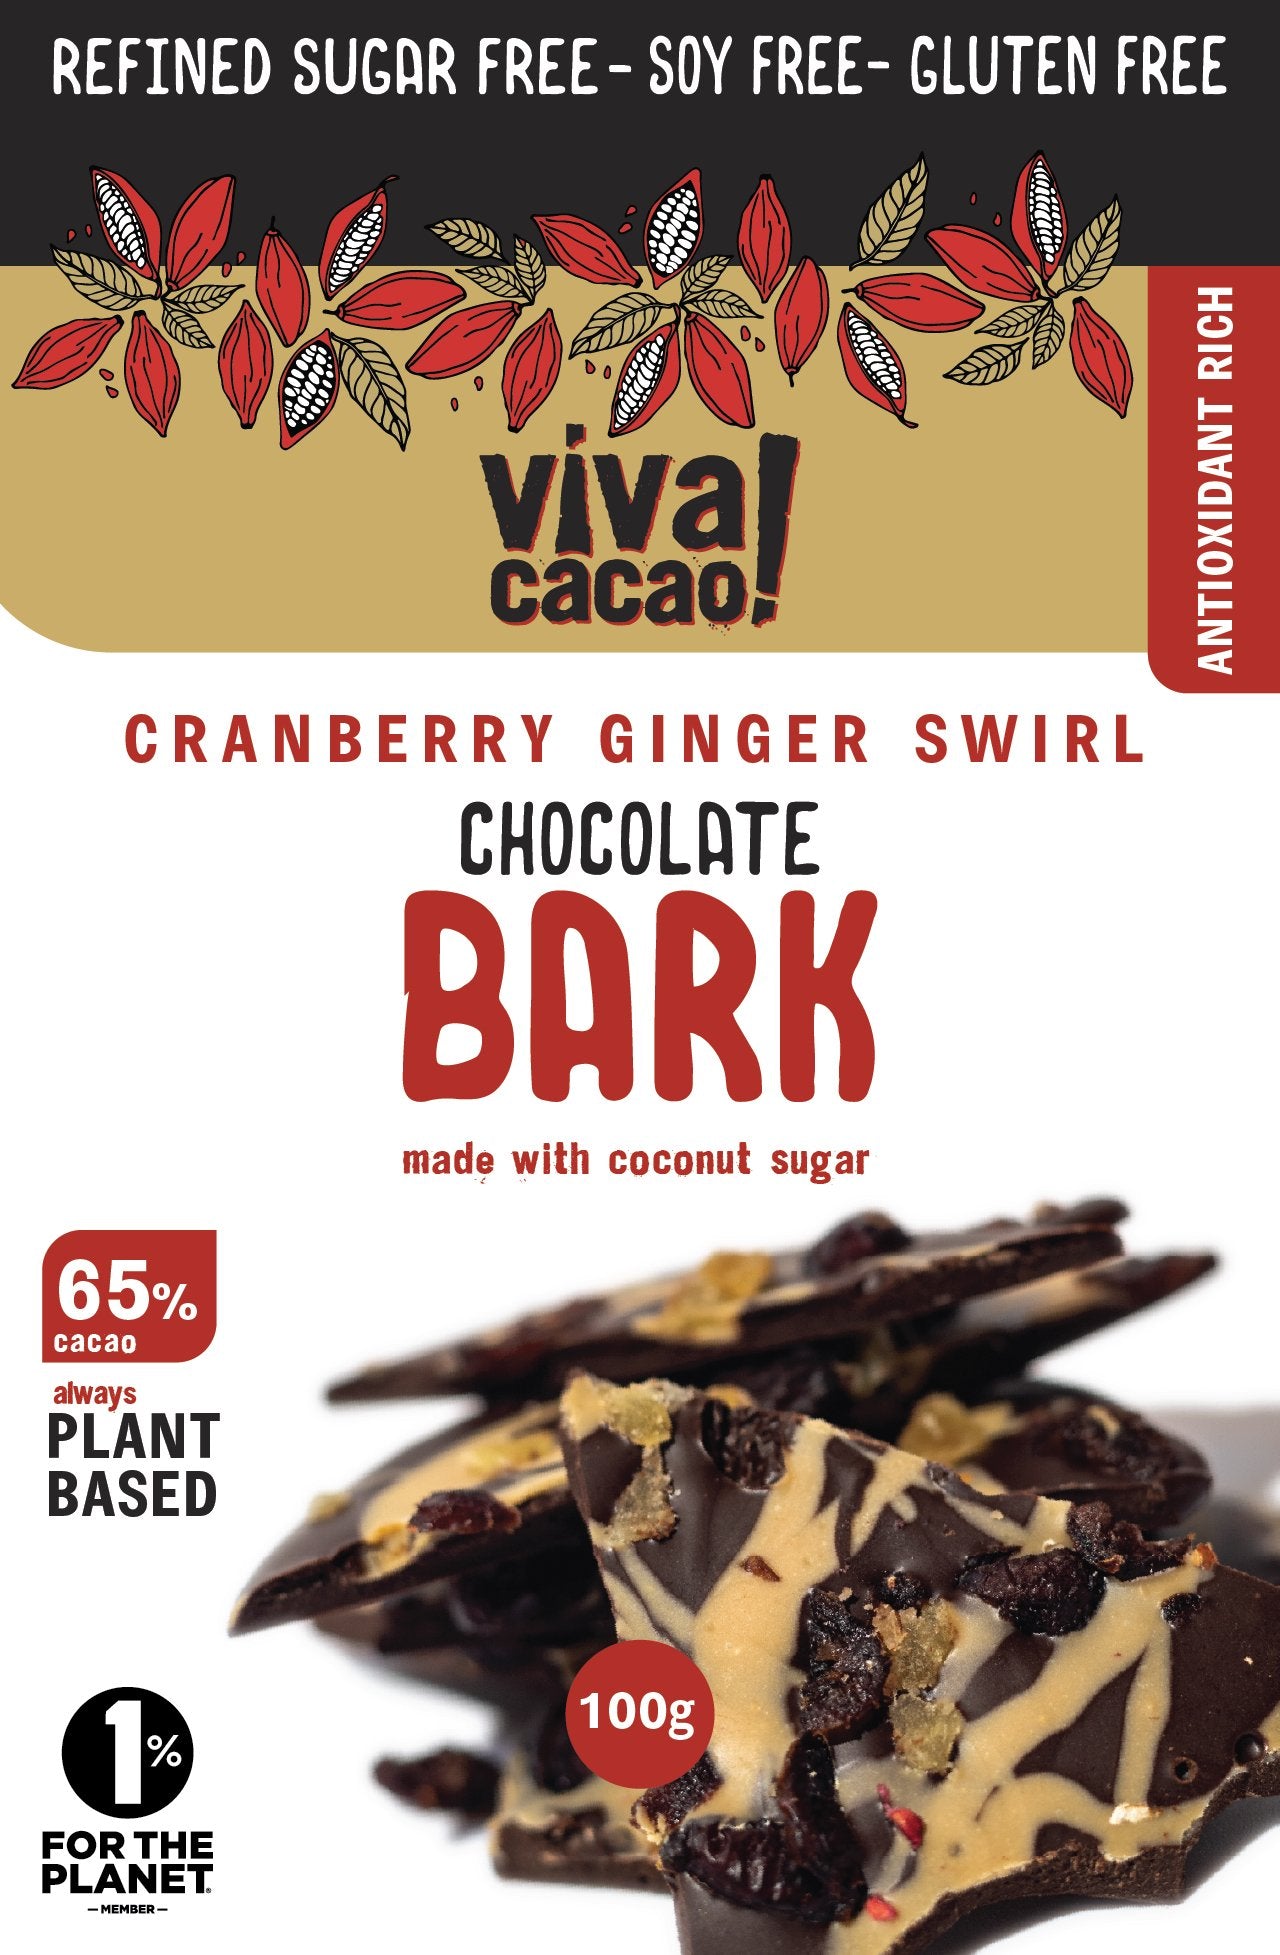 Cranberry Ginger Swirl chocolate bark - VIVA CACAO!